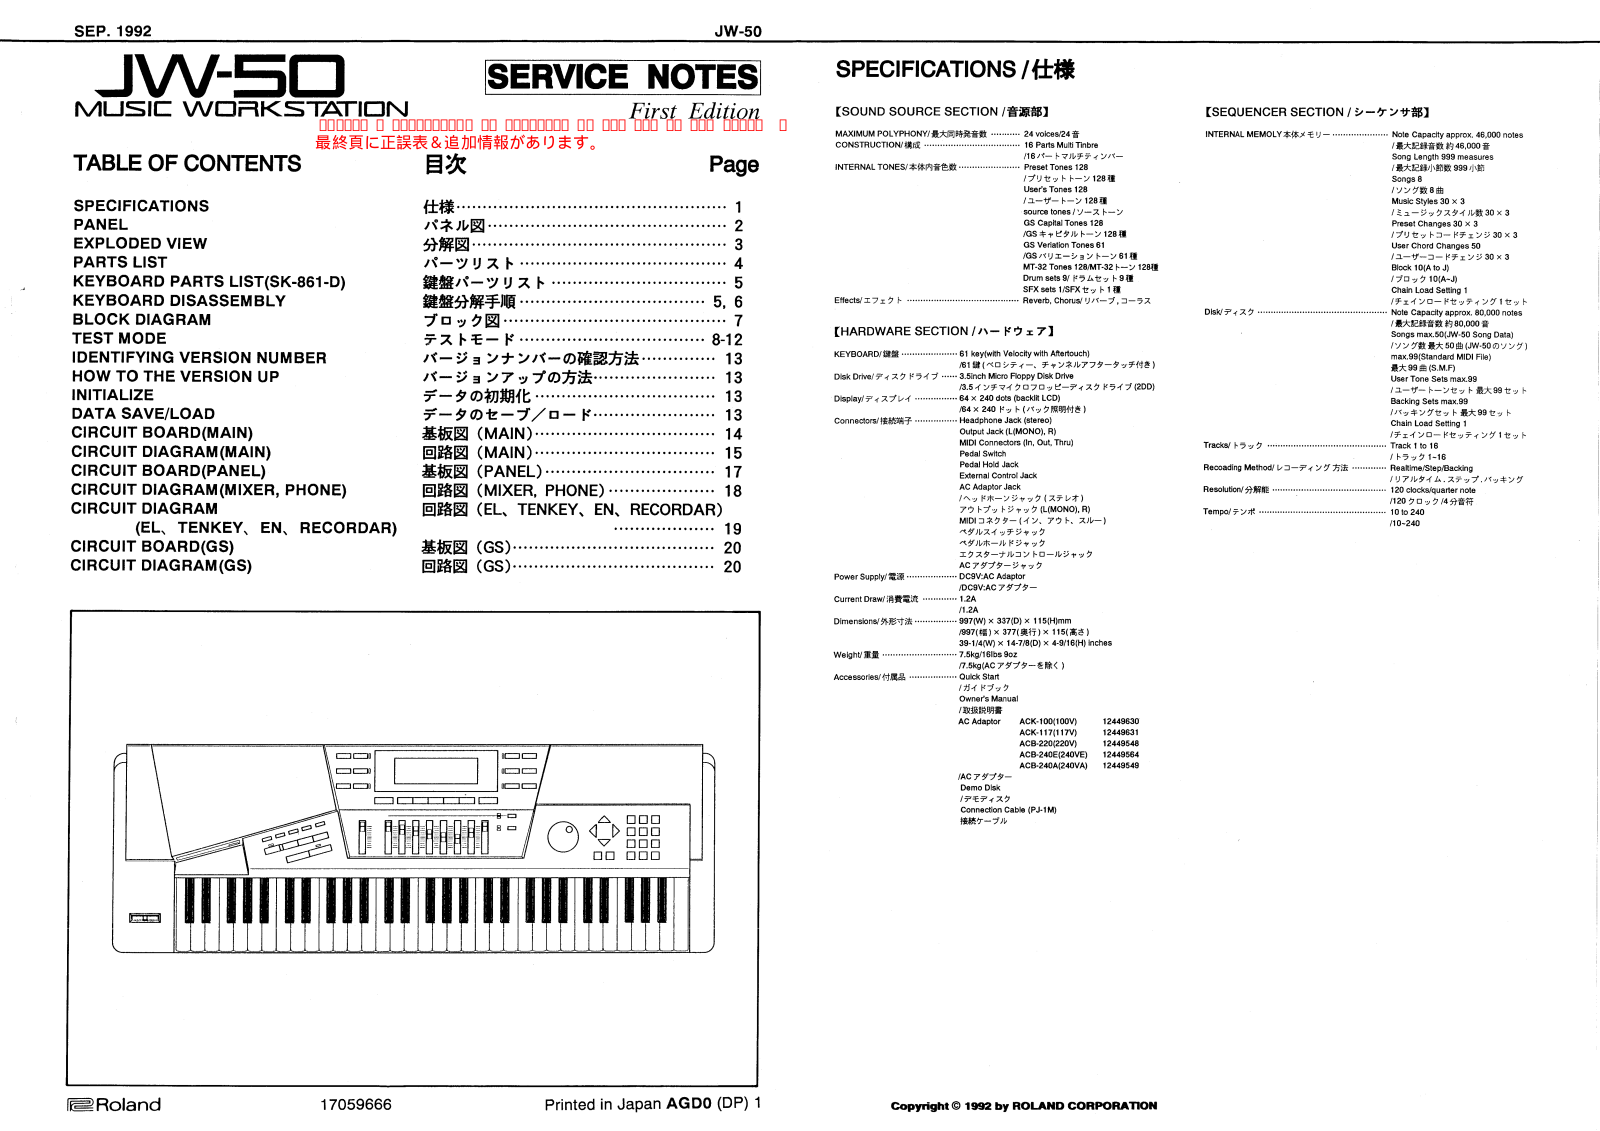 Roland JW-50 Service Manual